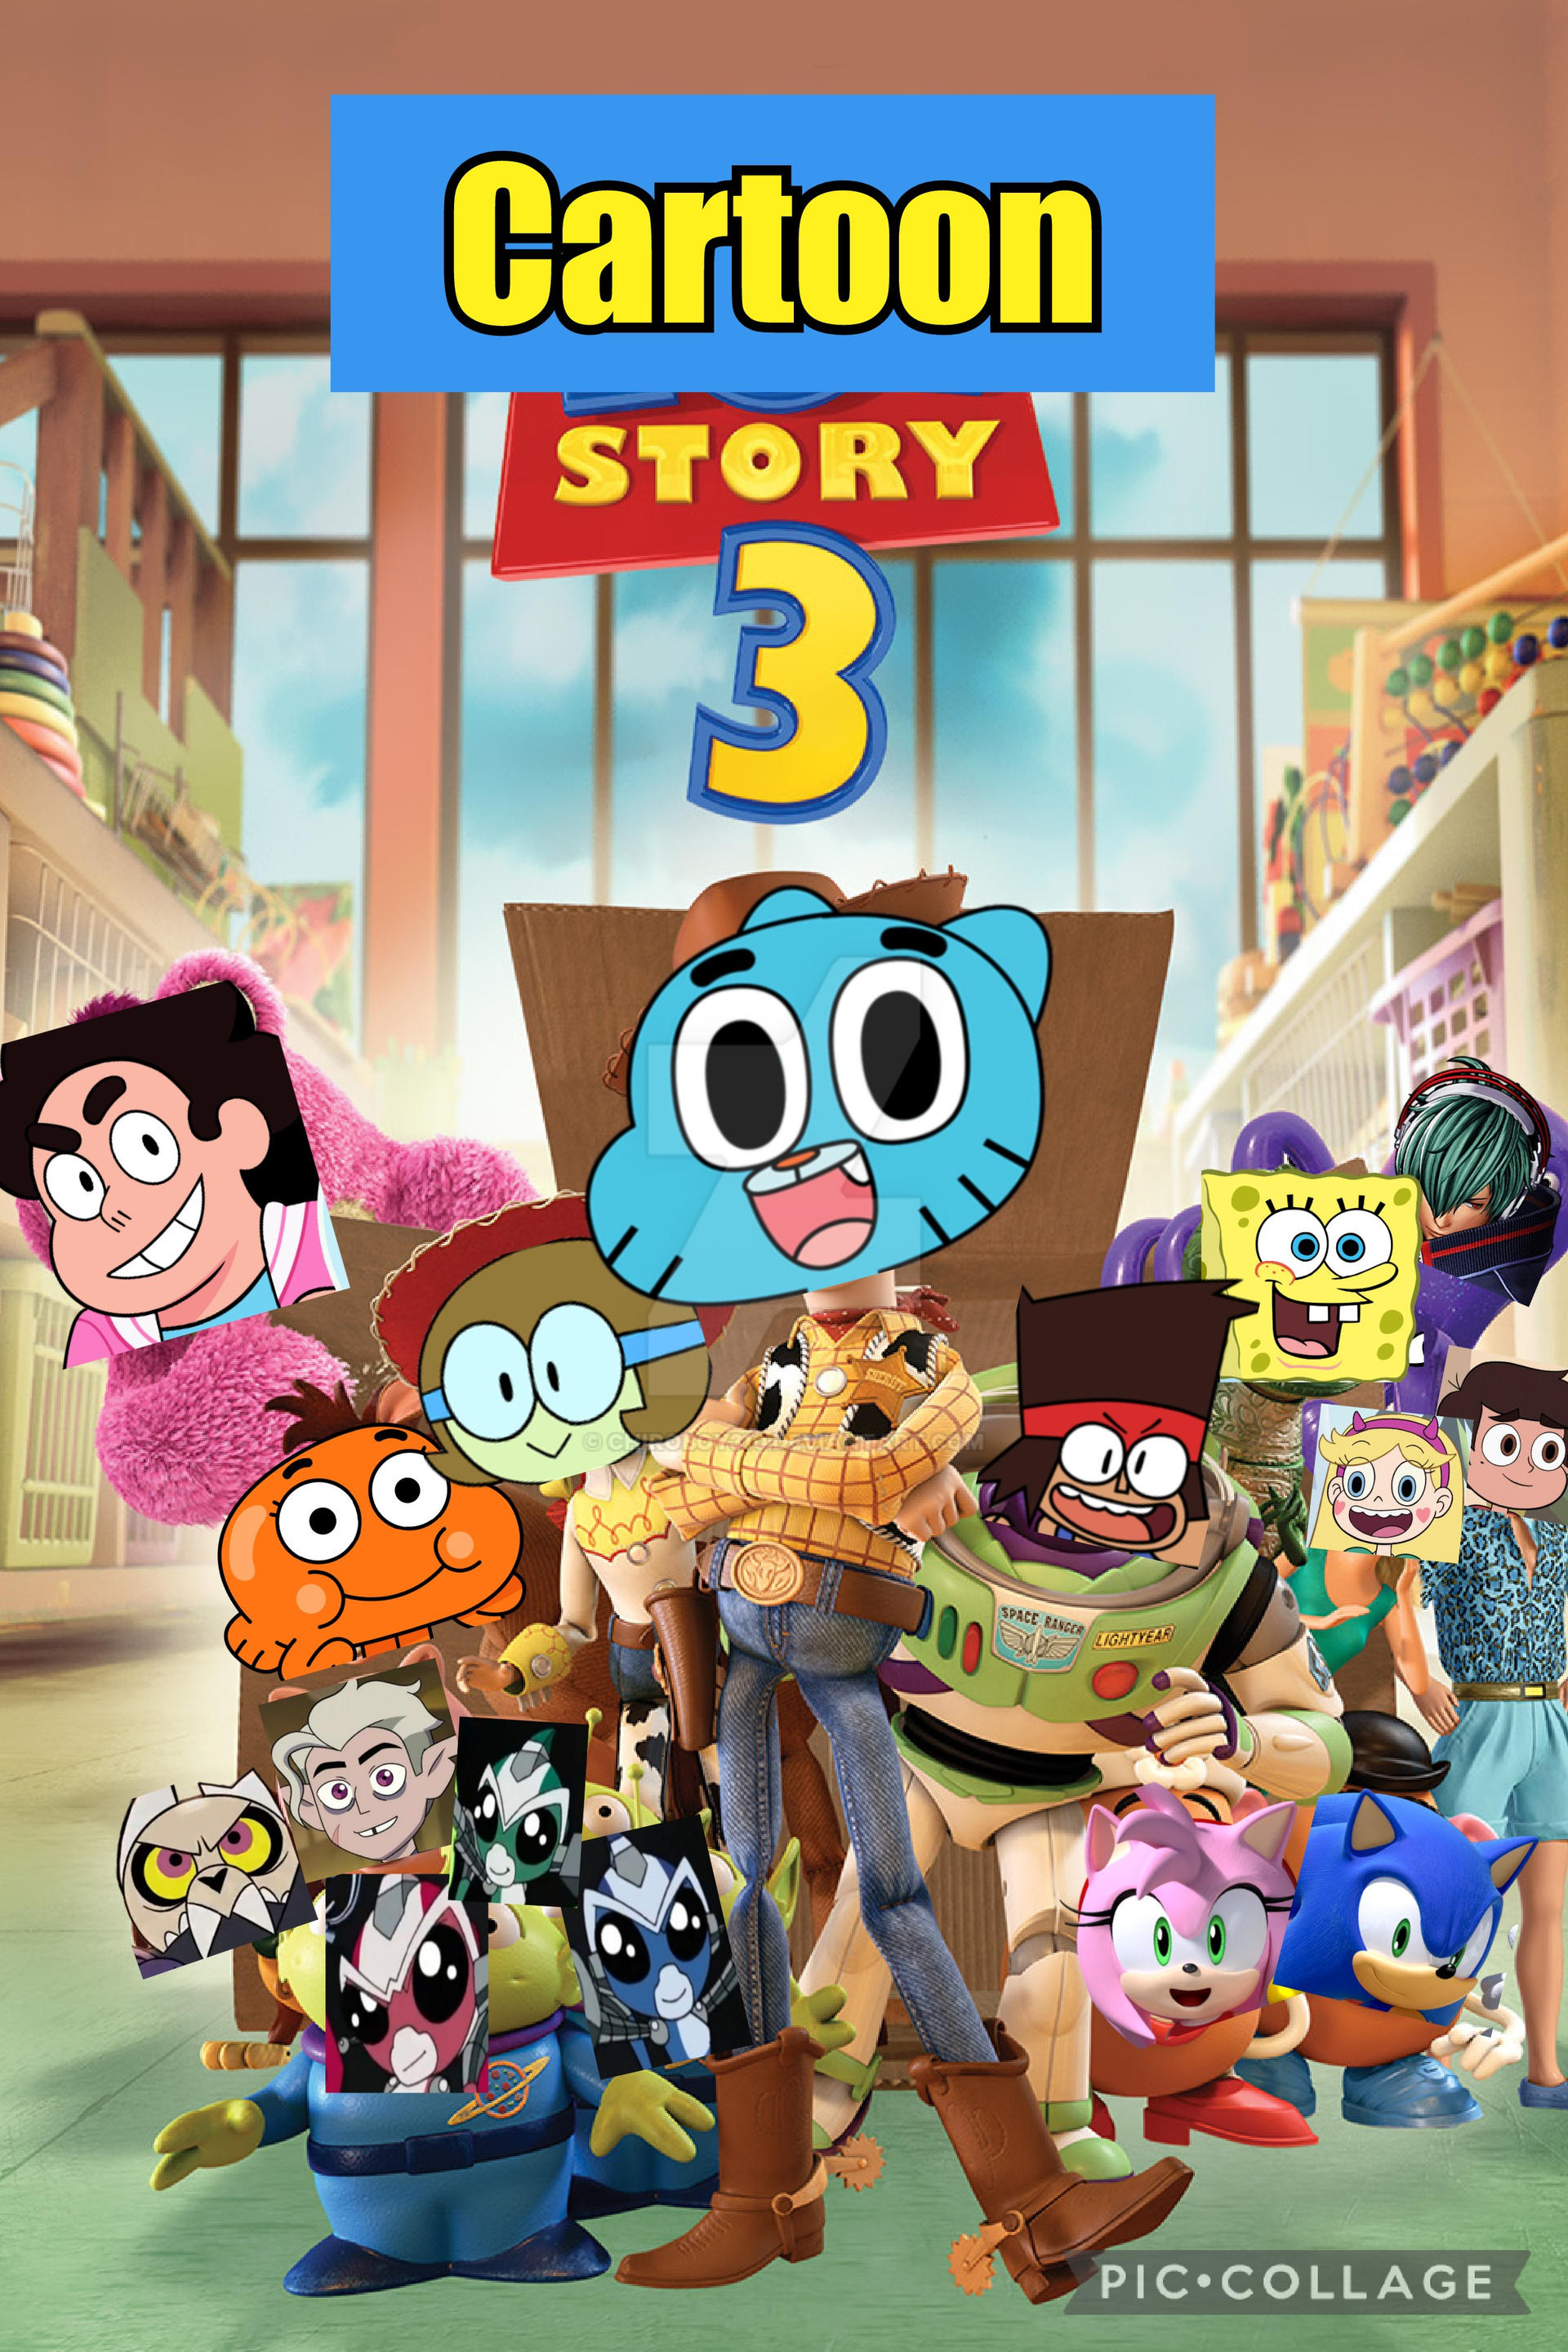 Cartoon Story 3 (Movie Poster) by ChiroBoy310 on DeviantArt